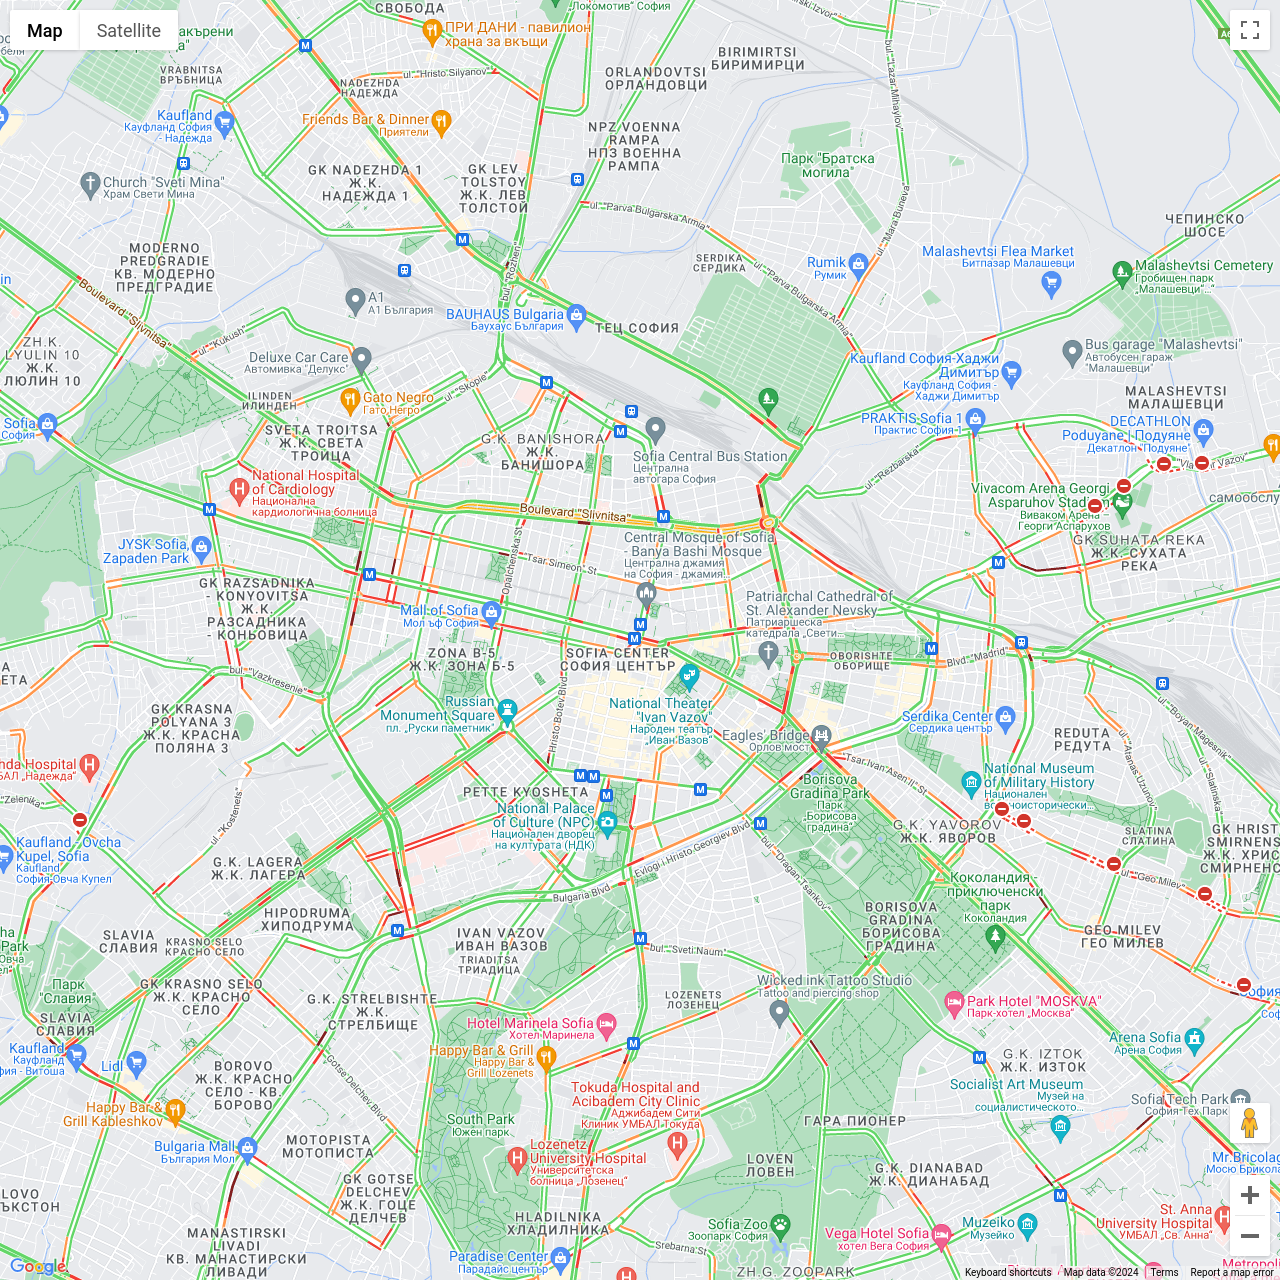 Sofia Traffic Congestion